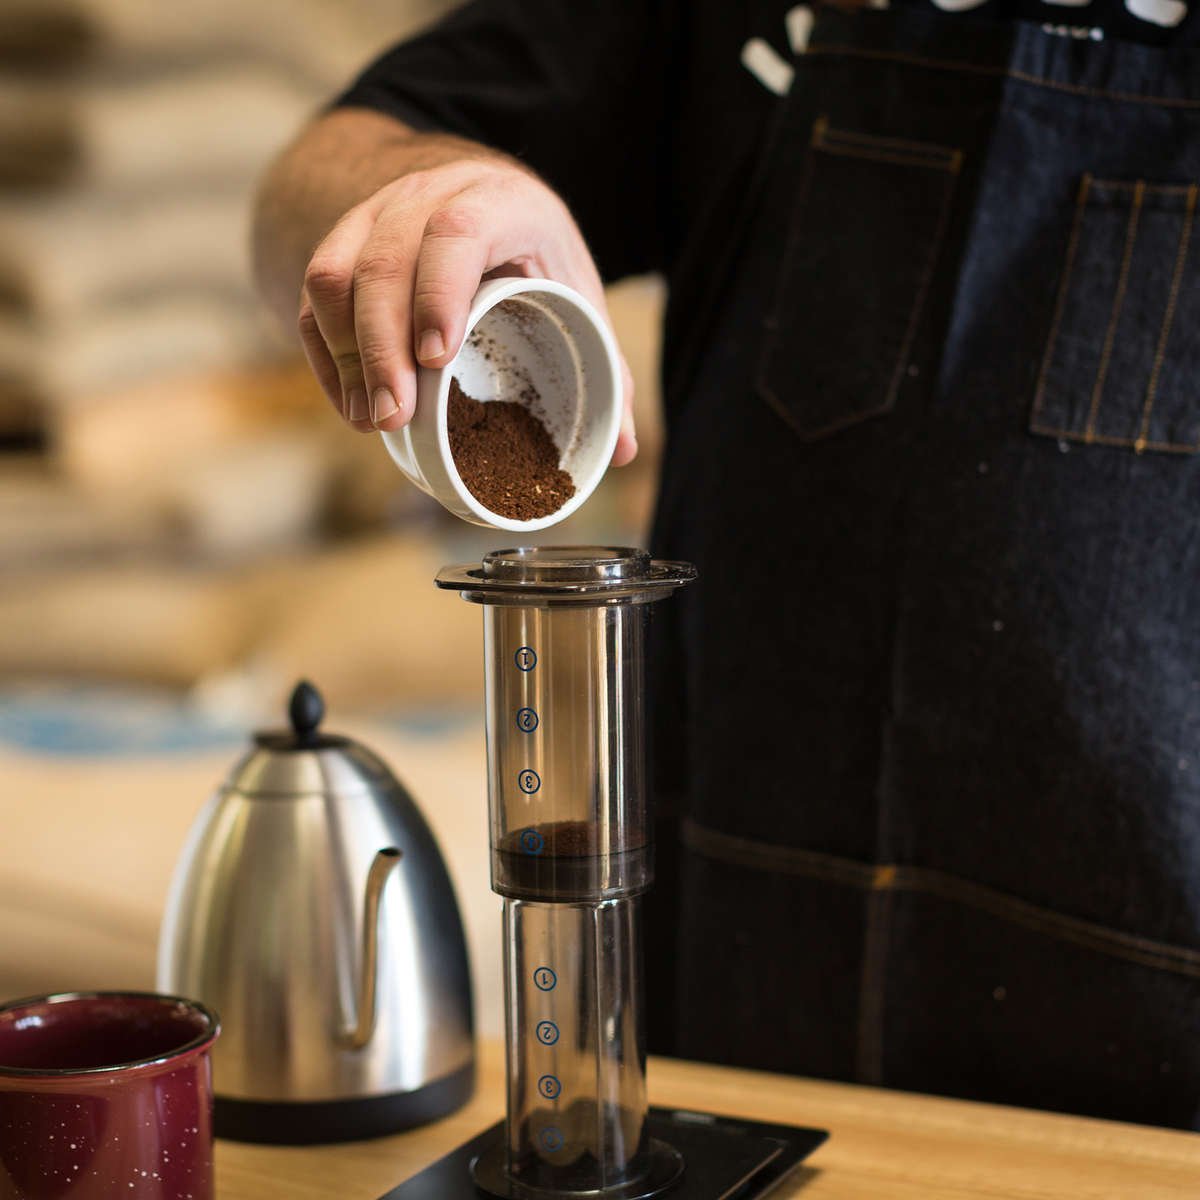 Pouring coffee into Aeropress